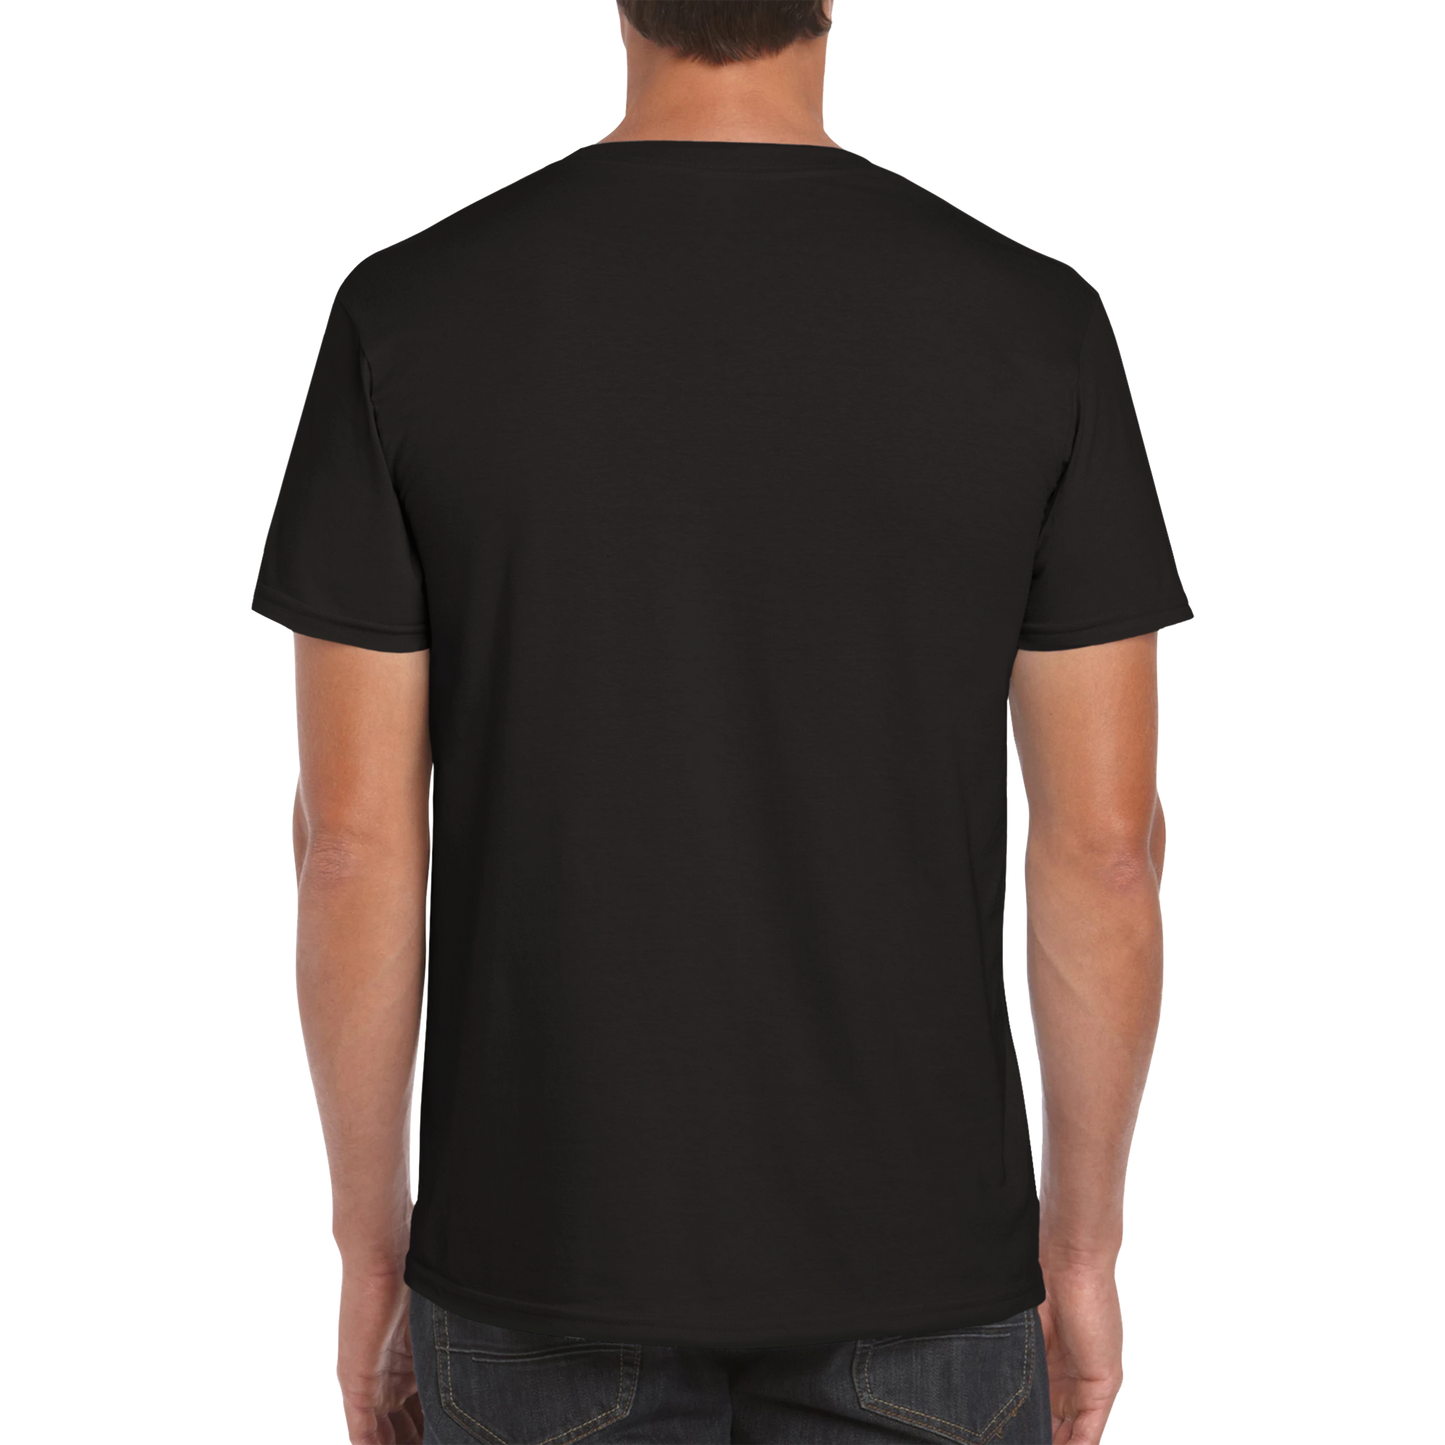 Black Gangar T-Shirt